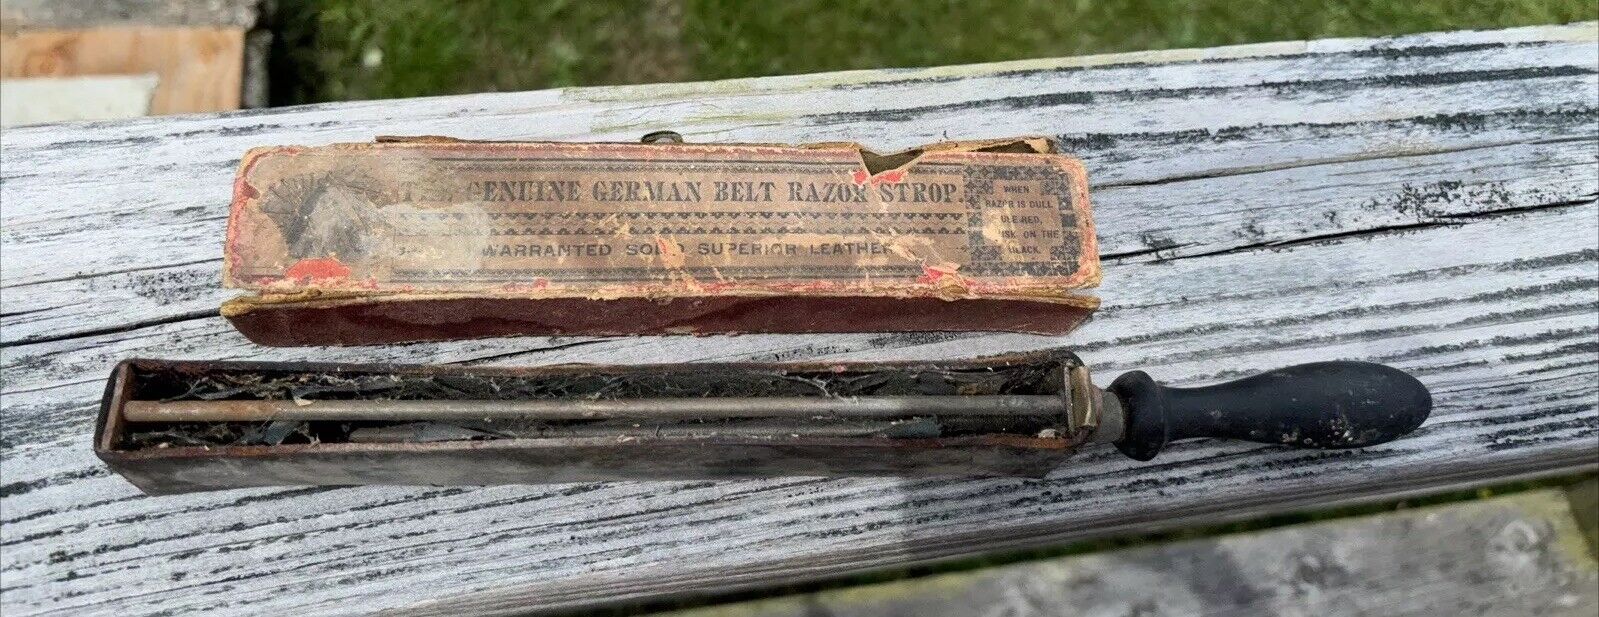 Antique The Genuine German Belt Razor Strop